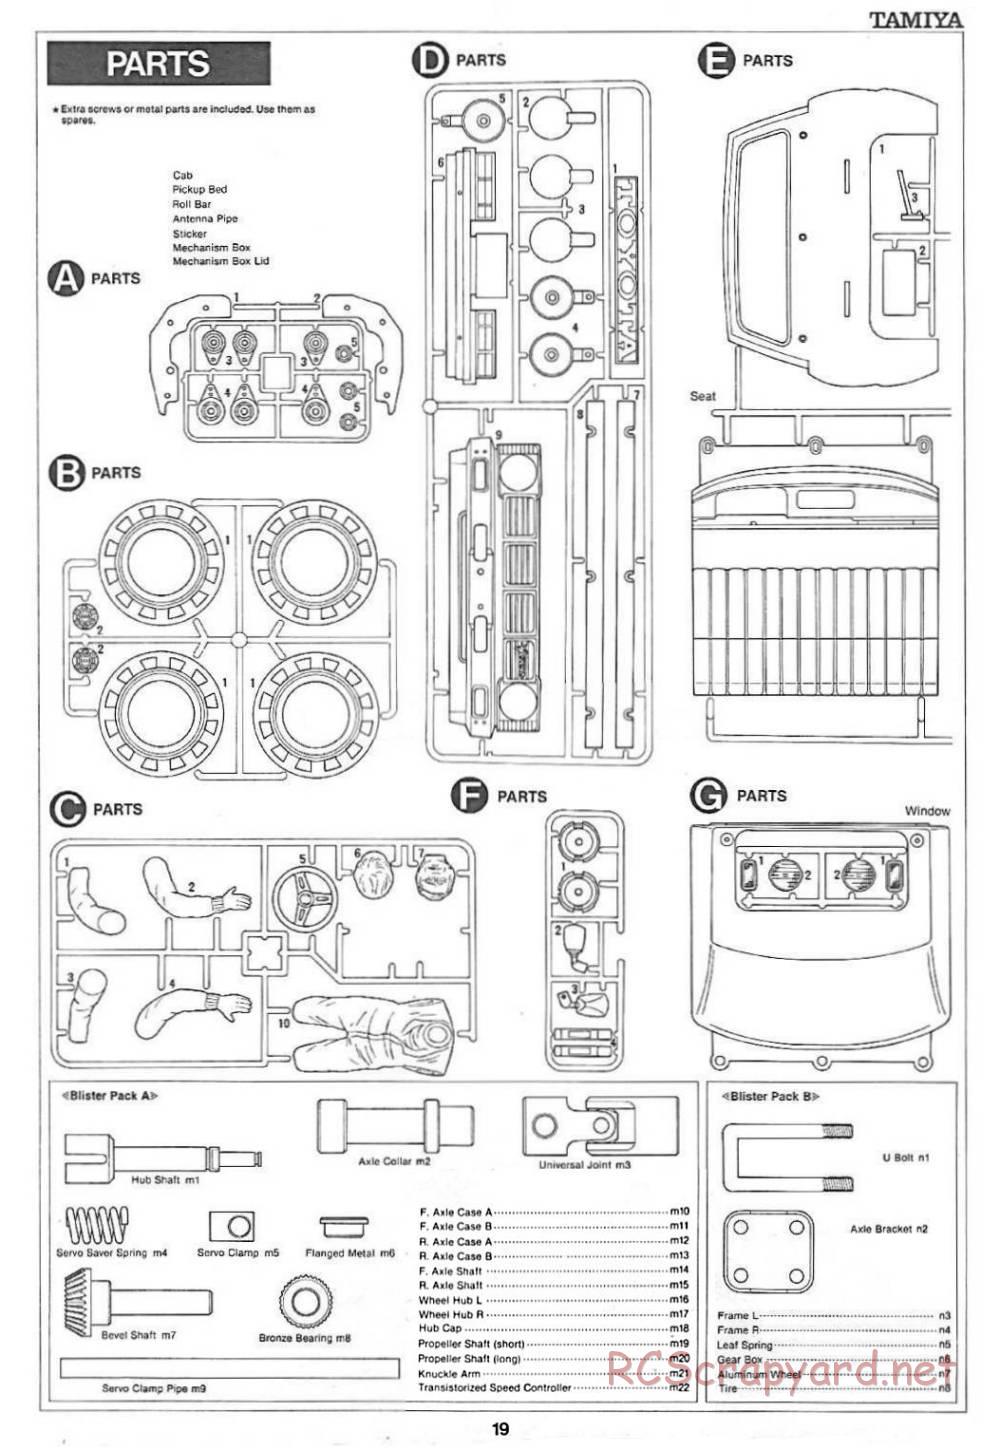 Tamiya - Toyota 4x4 Pick-Up - 58028 - Manual - Page 19